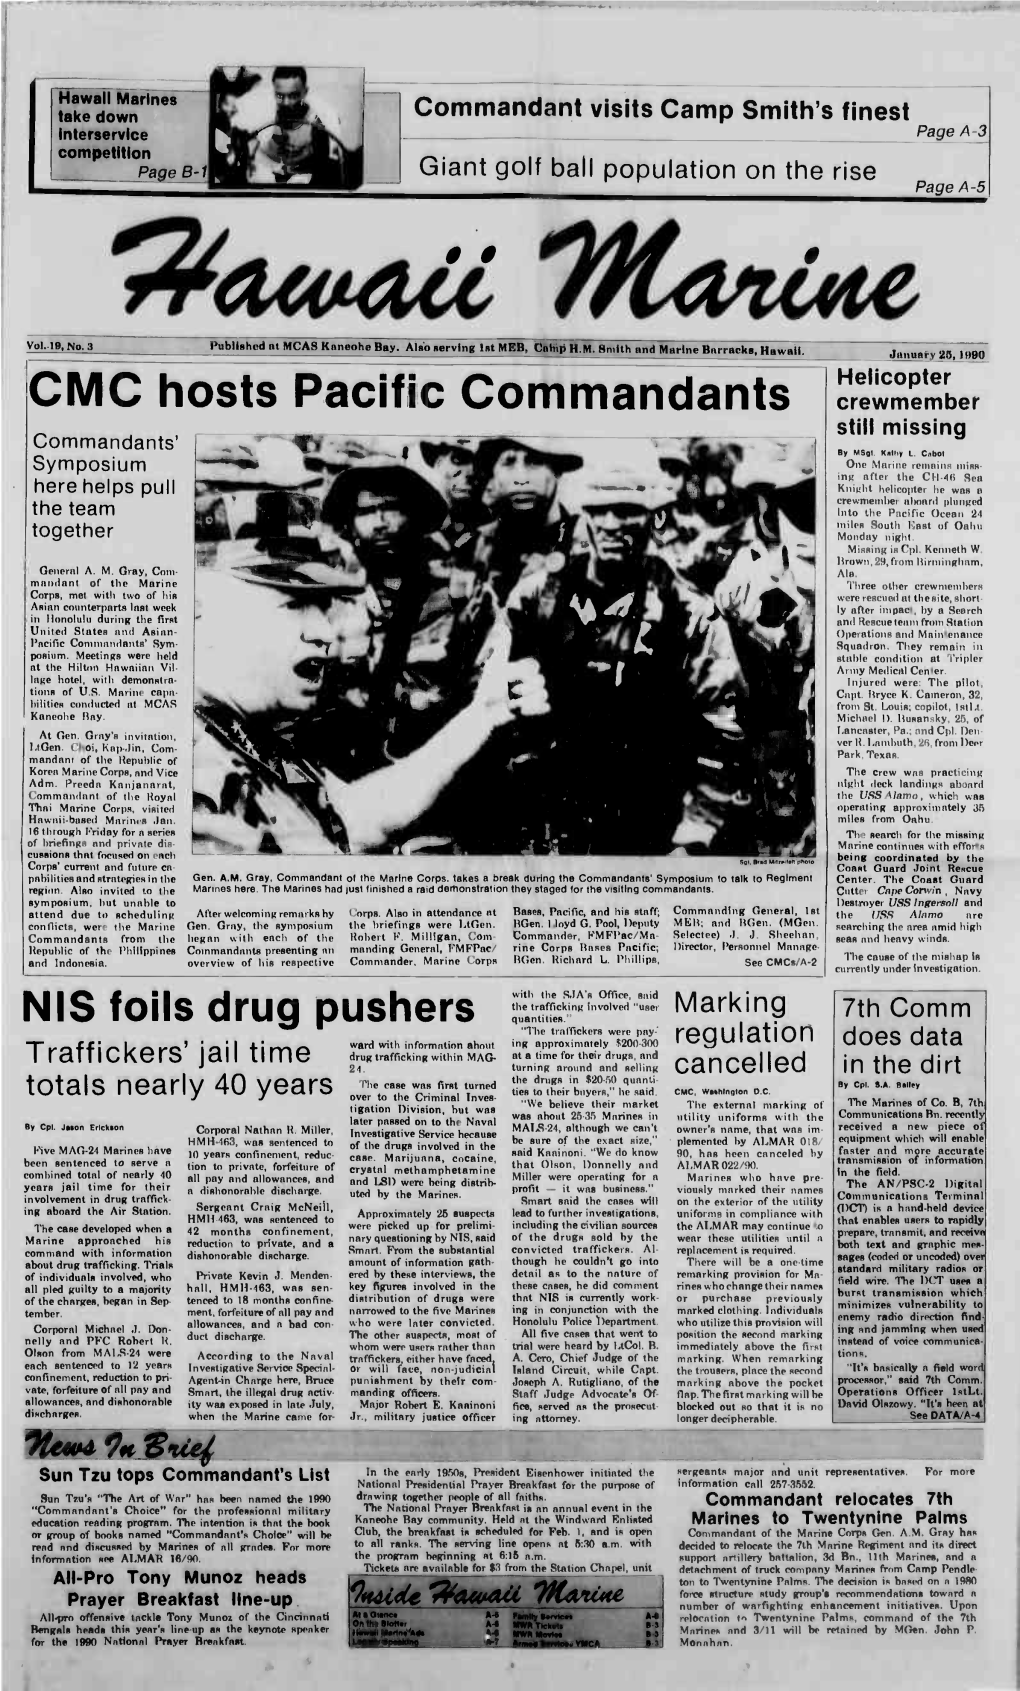 CMC Hosts Pacific Commandants Crewmember Still Missing Commandants' by Tattgl